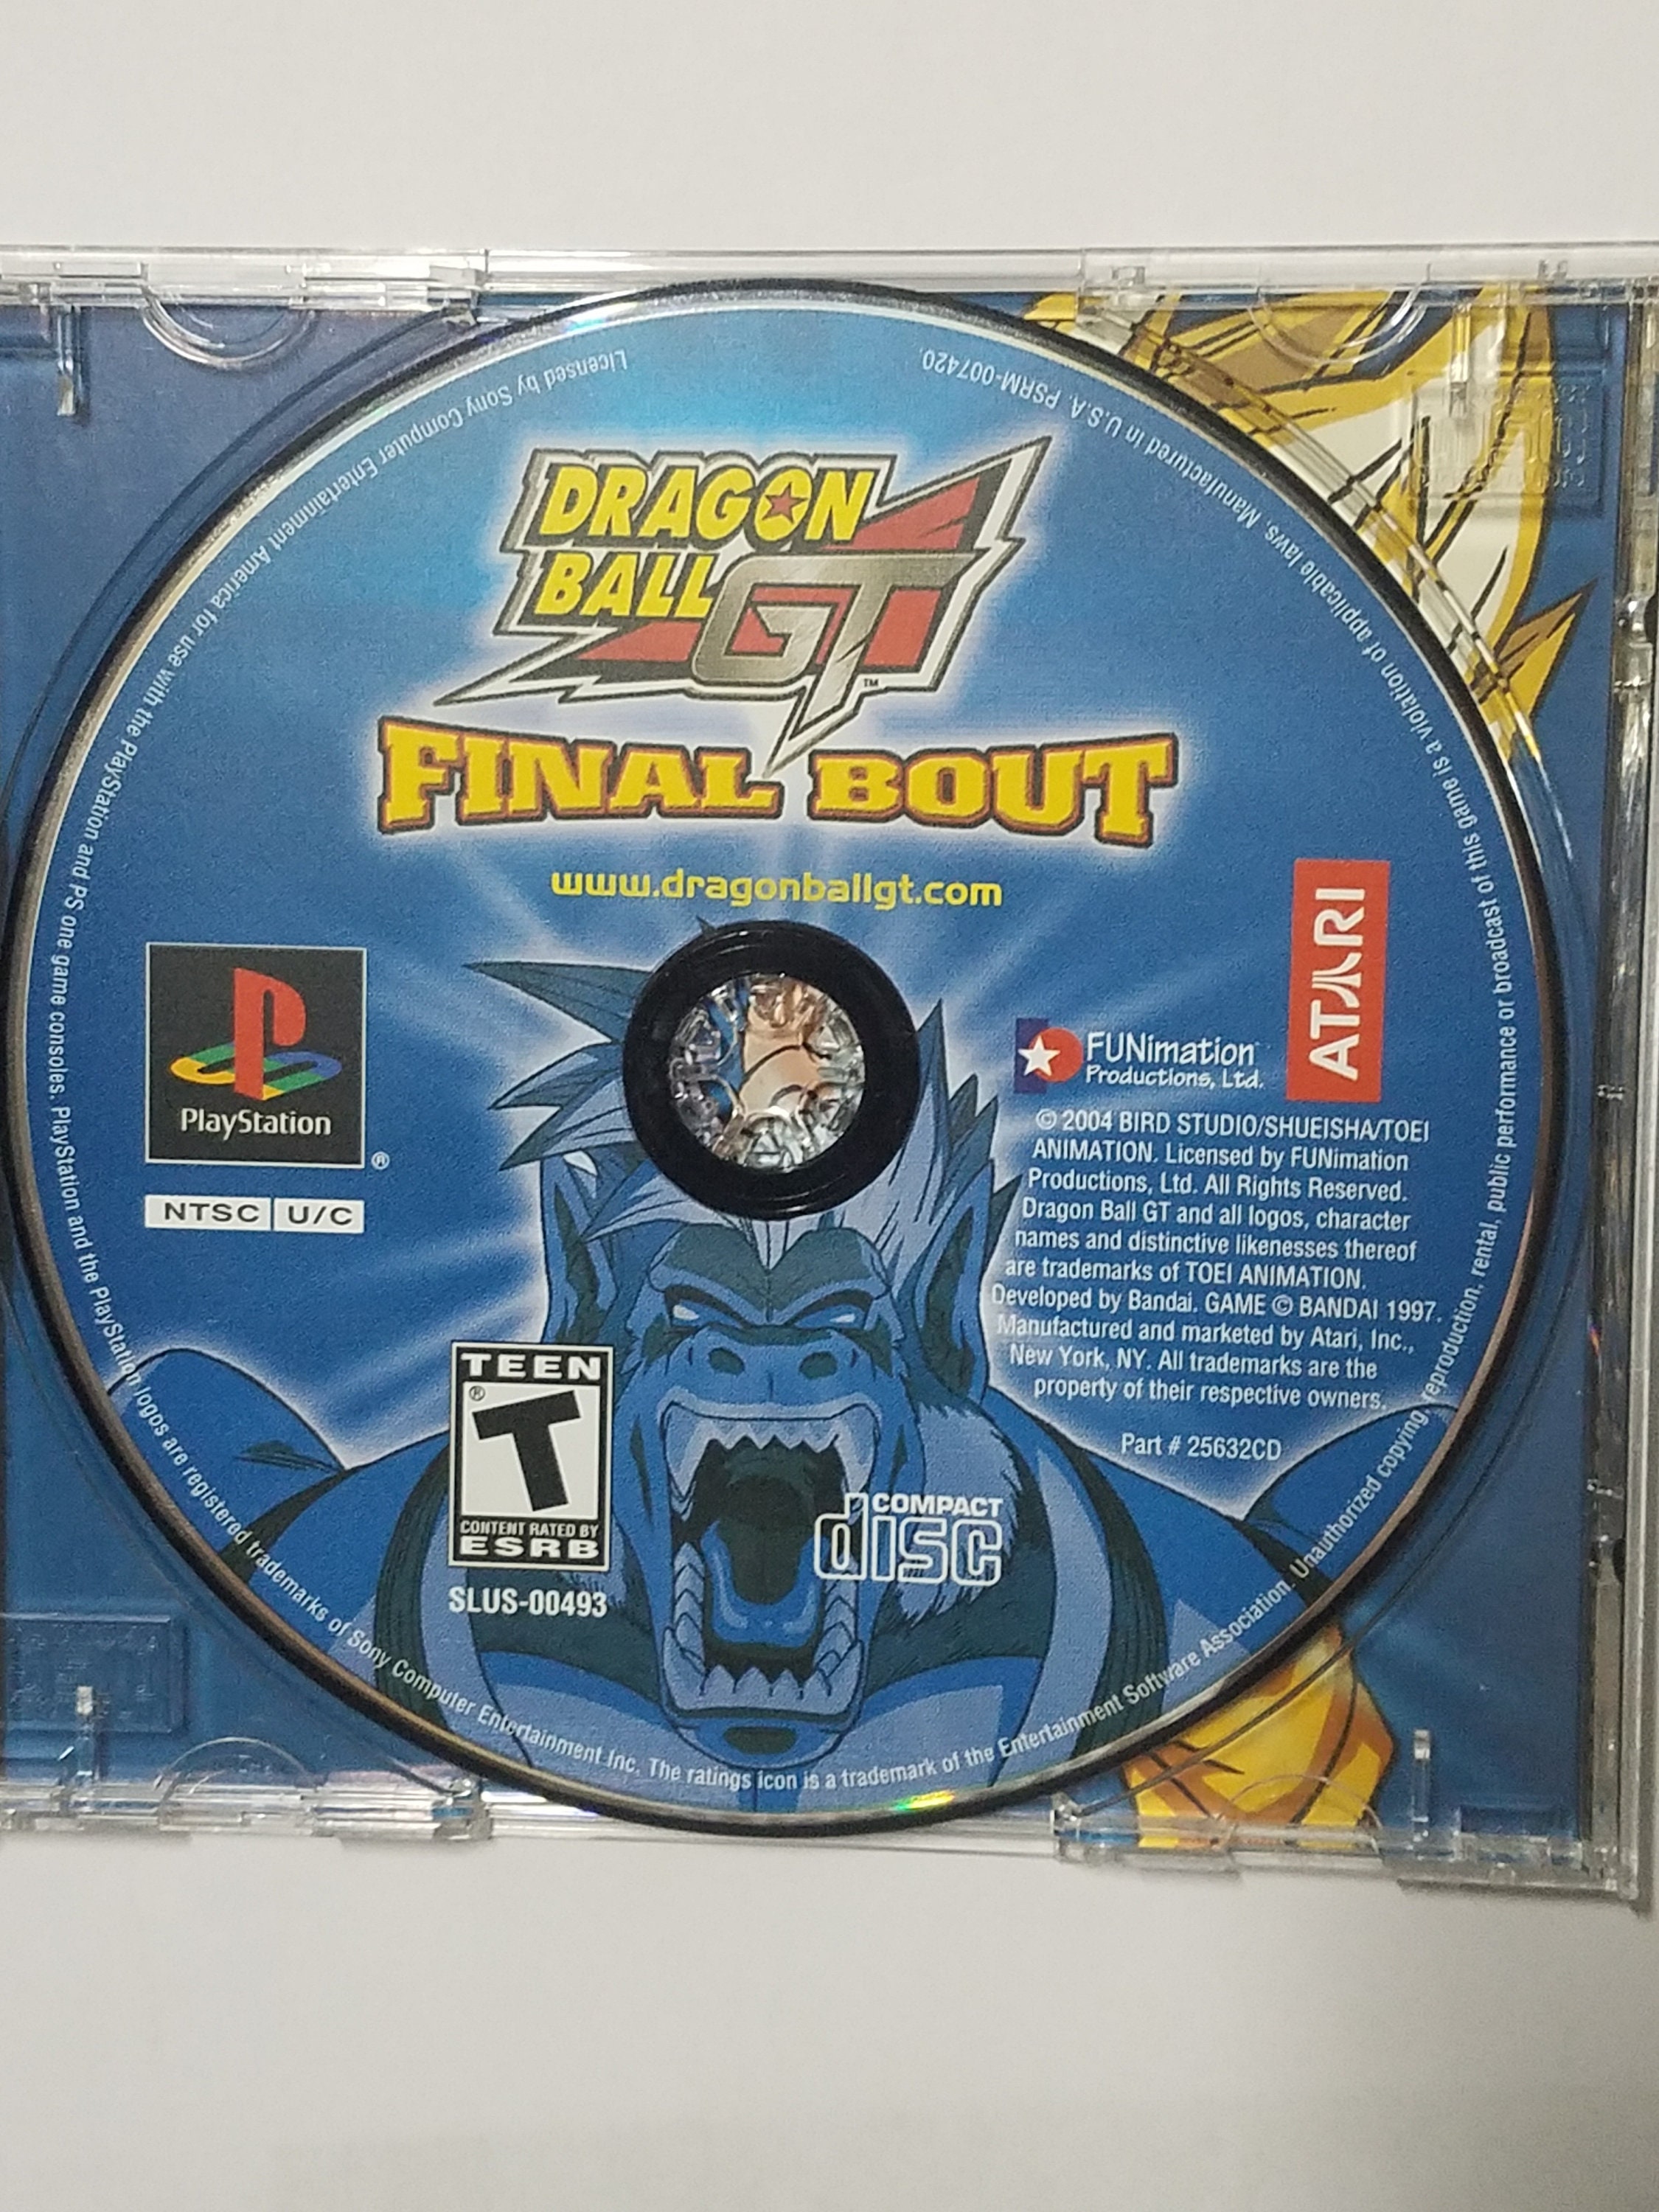  Dragon Ball GT: Final Bout : Video Games